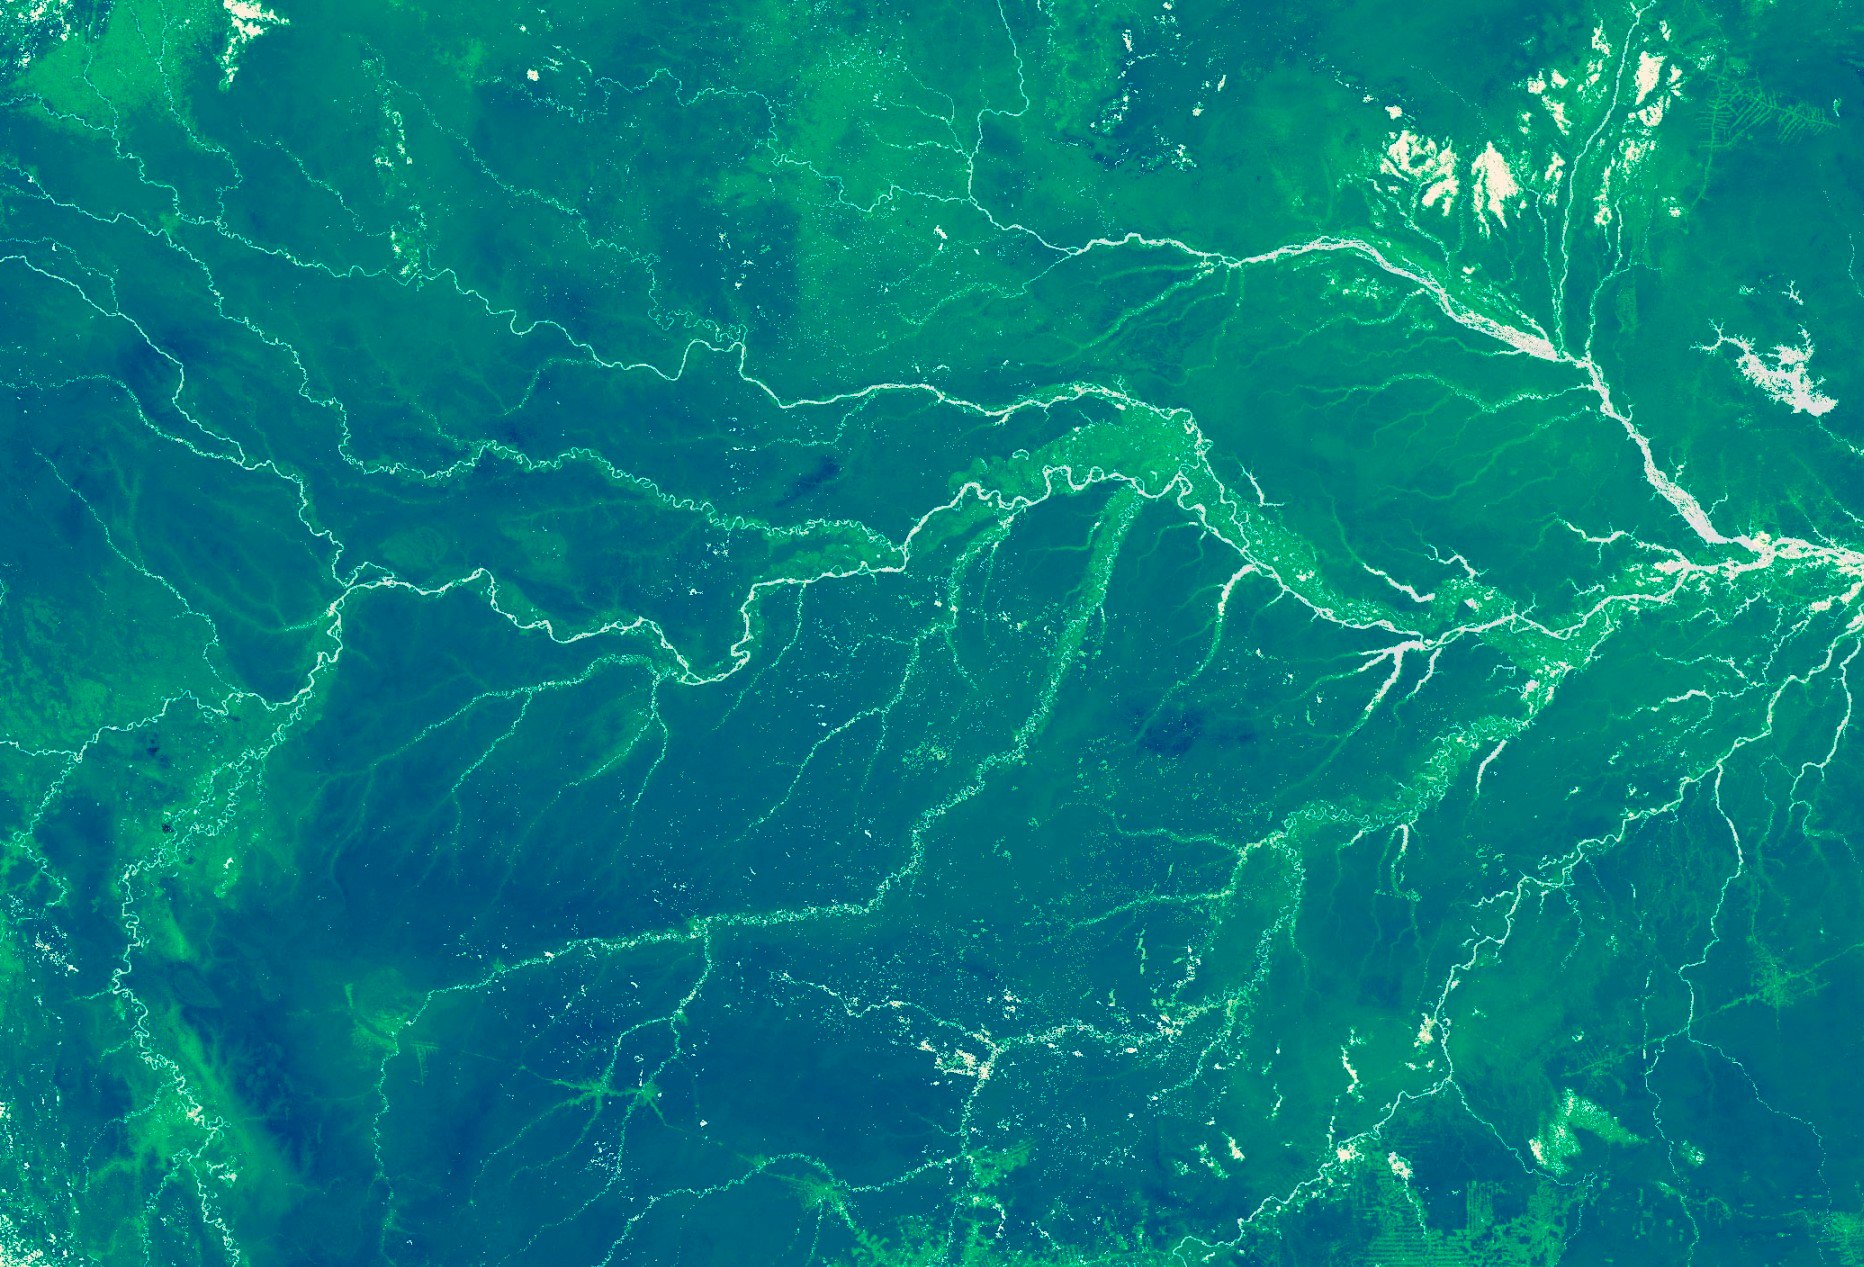 Satellite image of rainforest from orbit